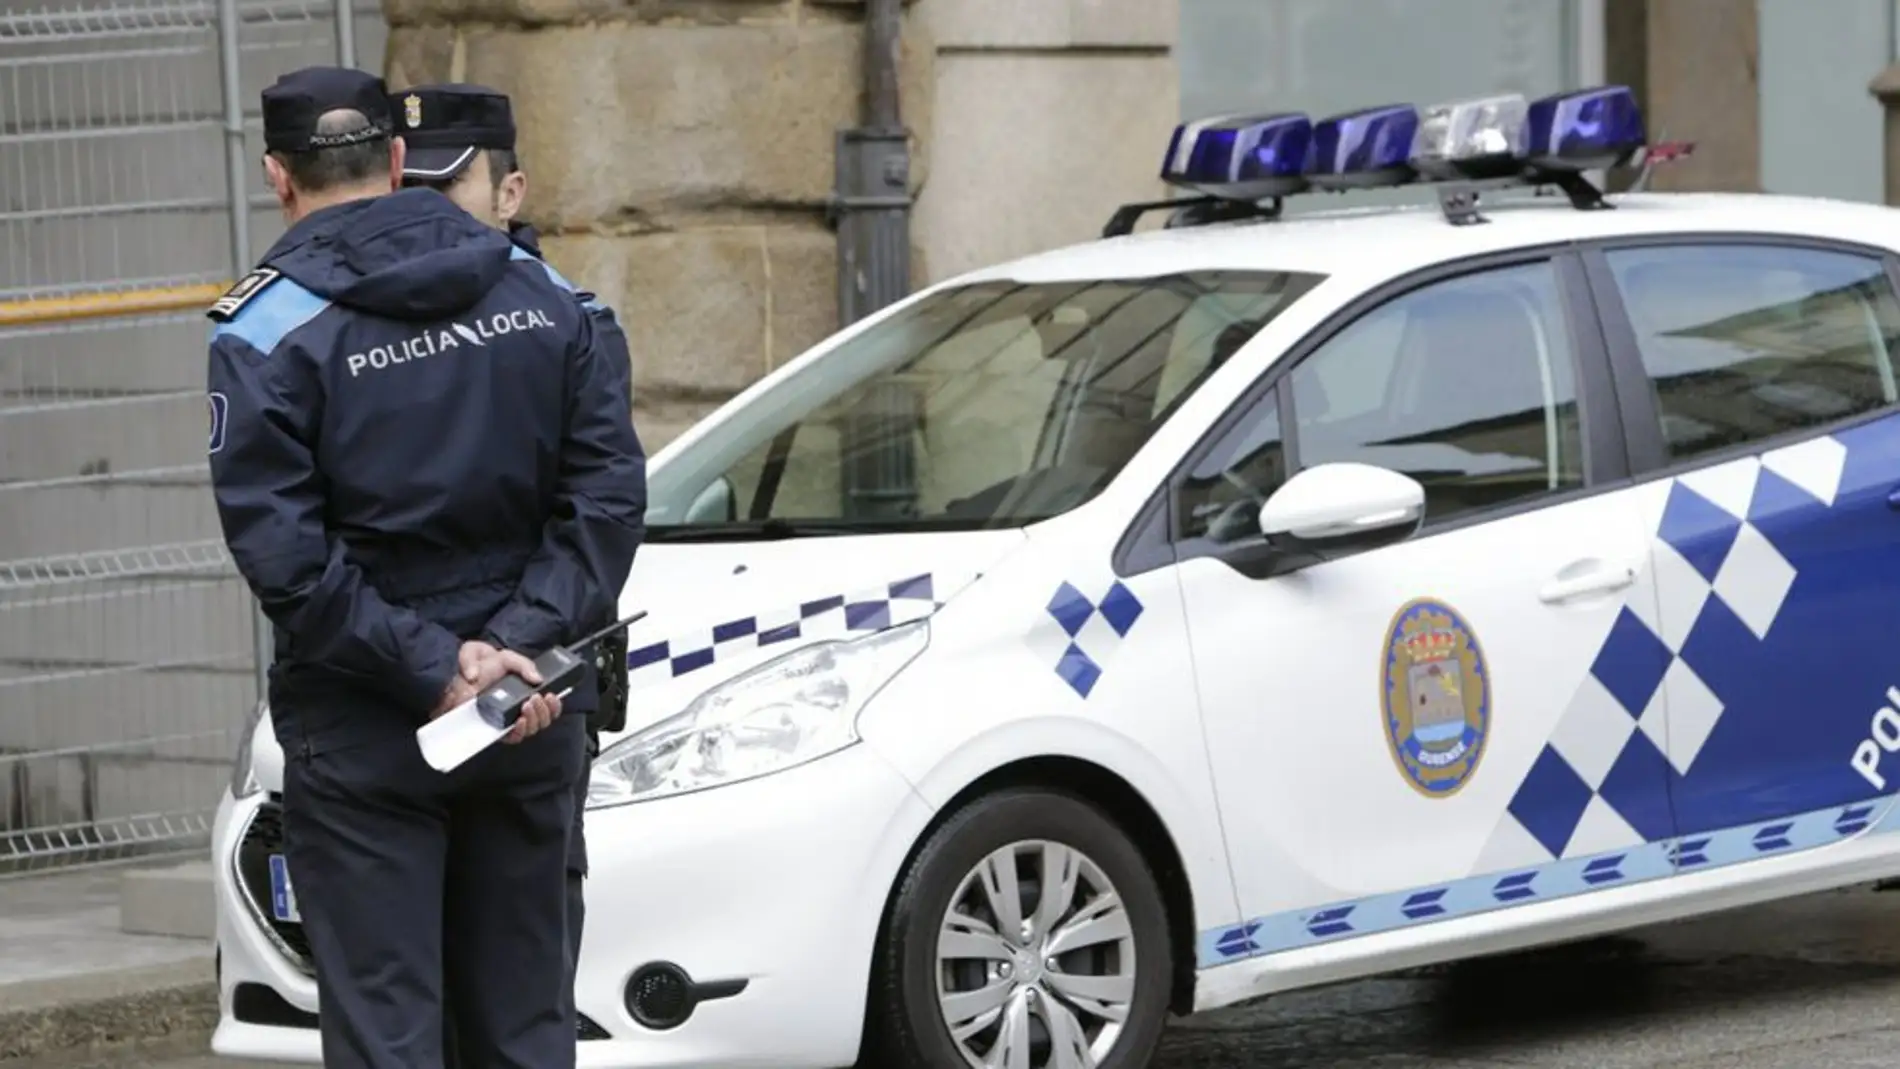 Policia Local Ourense